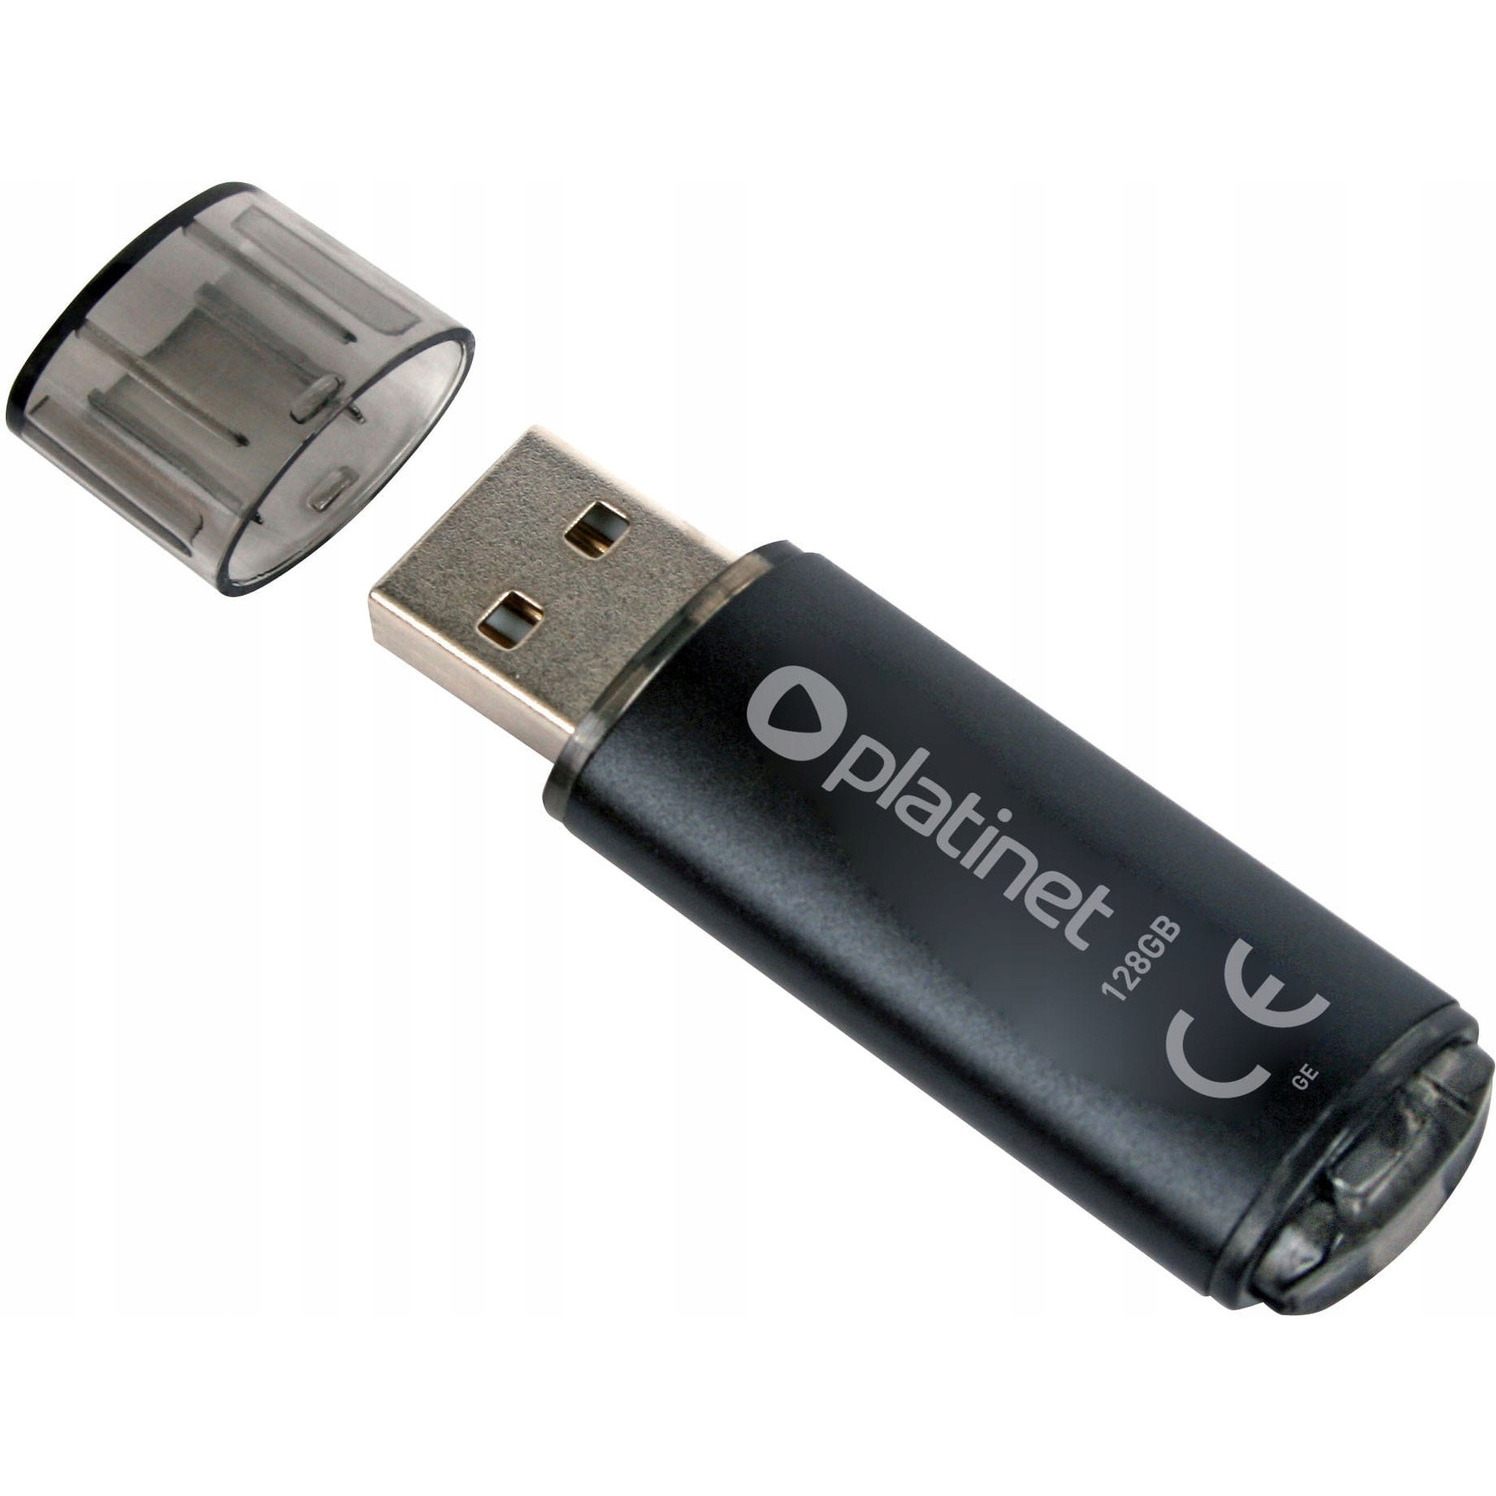 Pamięć USB PLATINET 128GB X-DEPO USB 2.0 (41590), xu 0114047